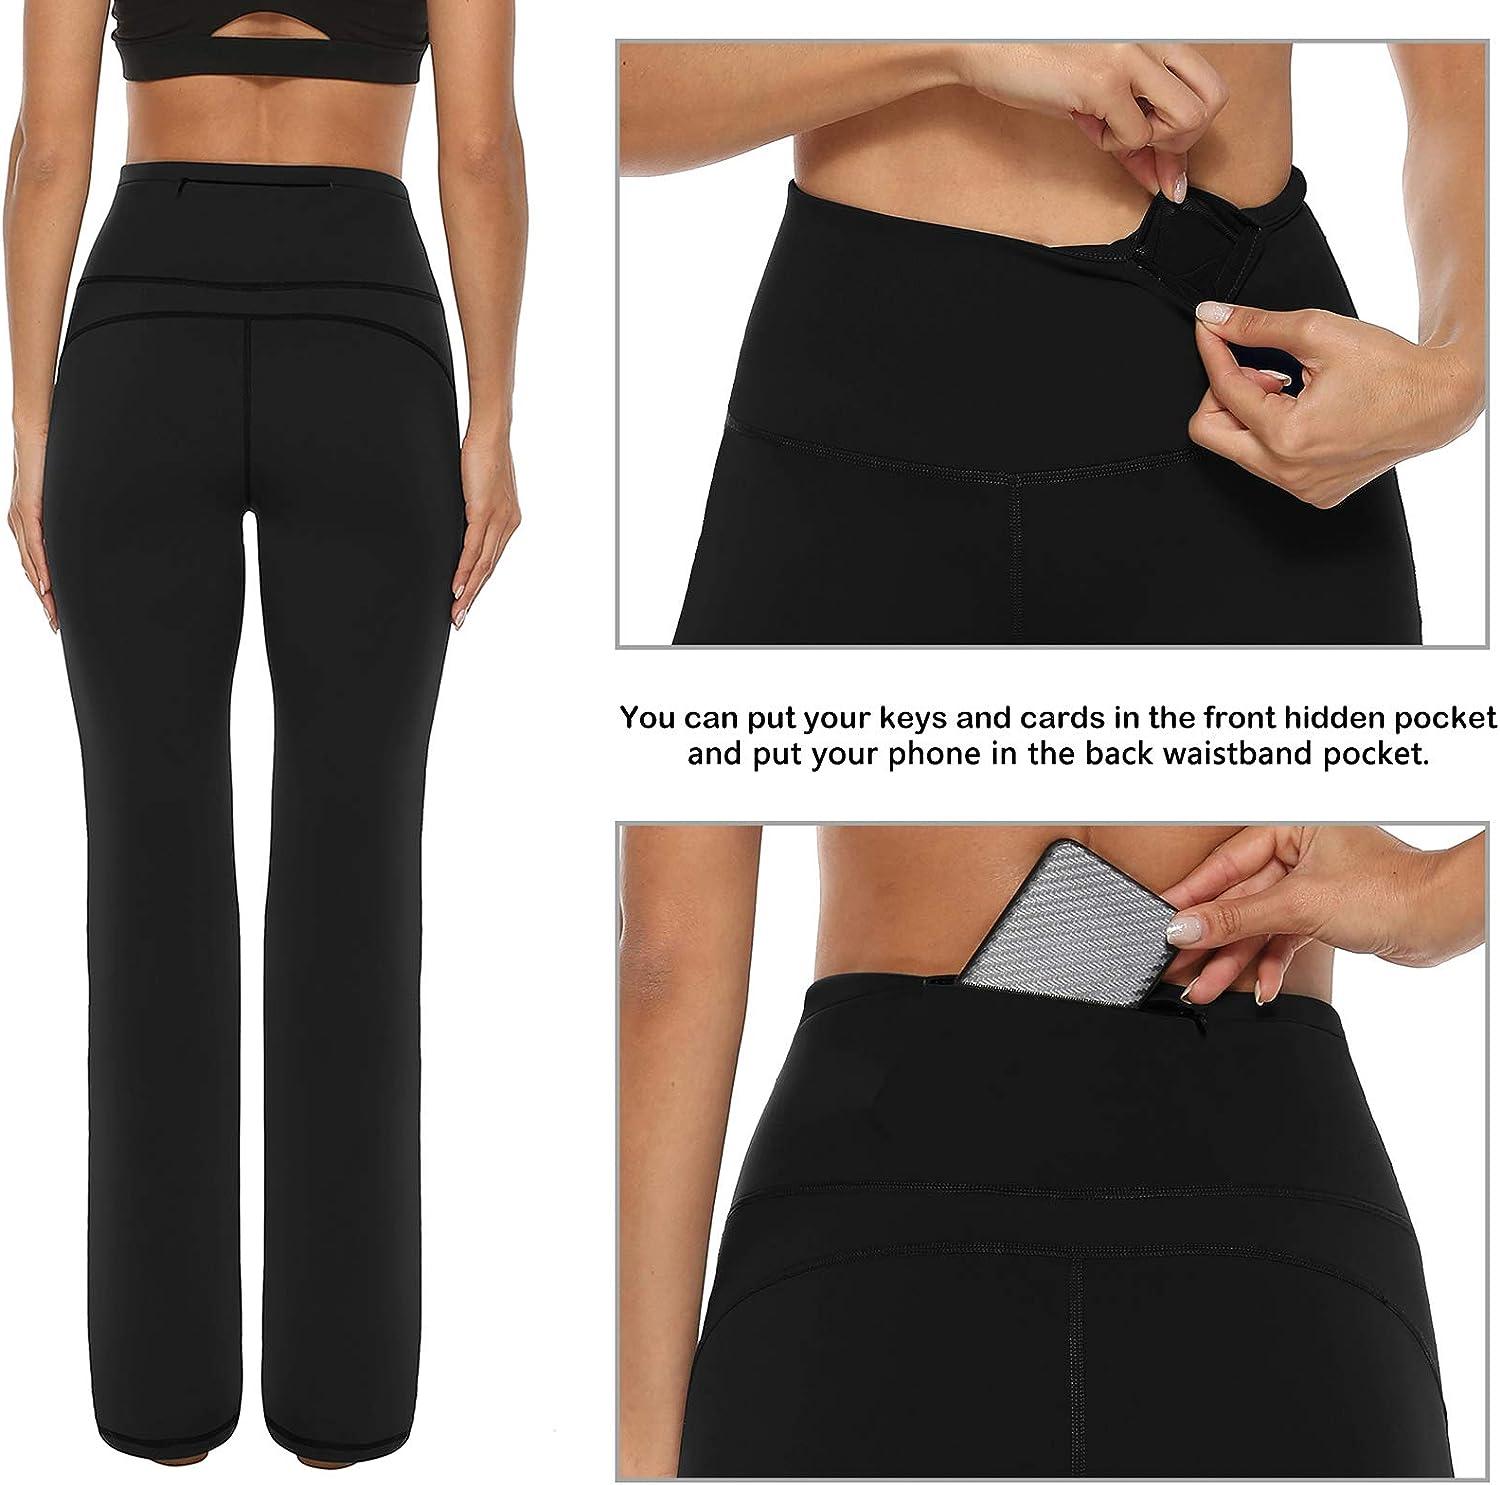 AFITNE Women's Bootcut Yoga Pants with Pockets, High Waist Workout